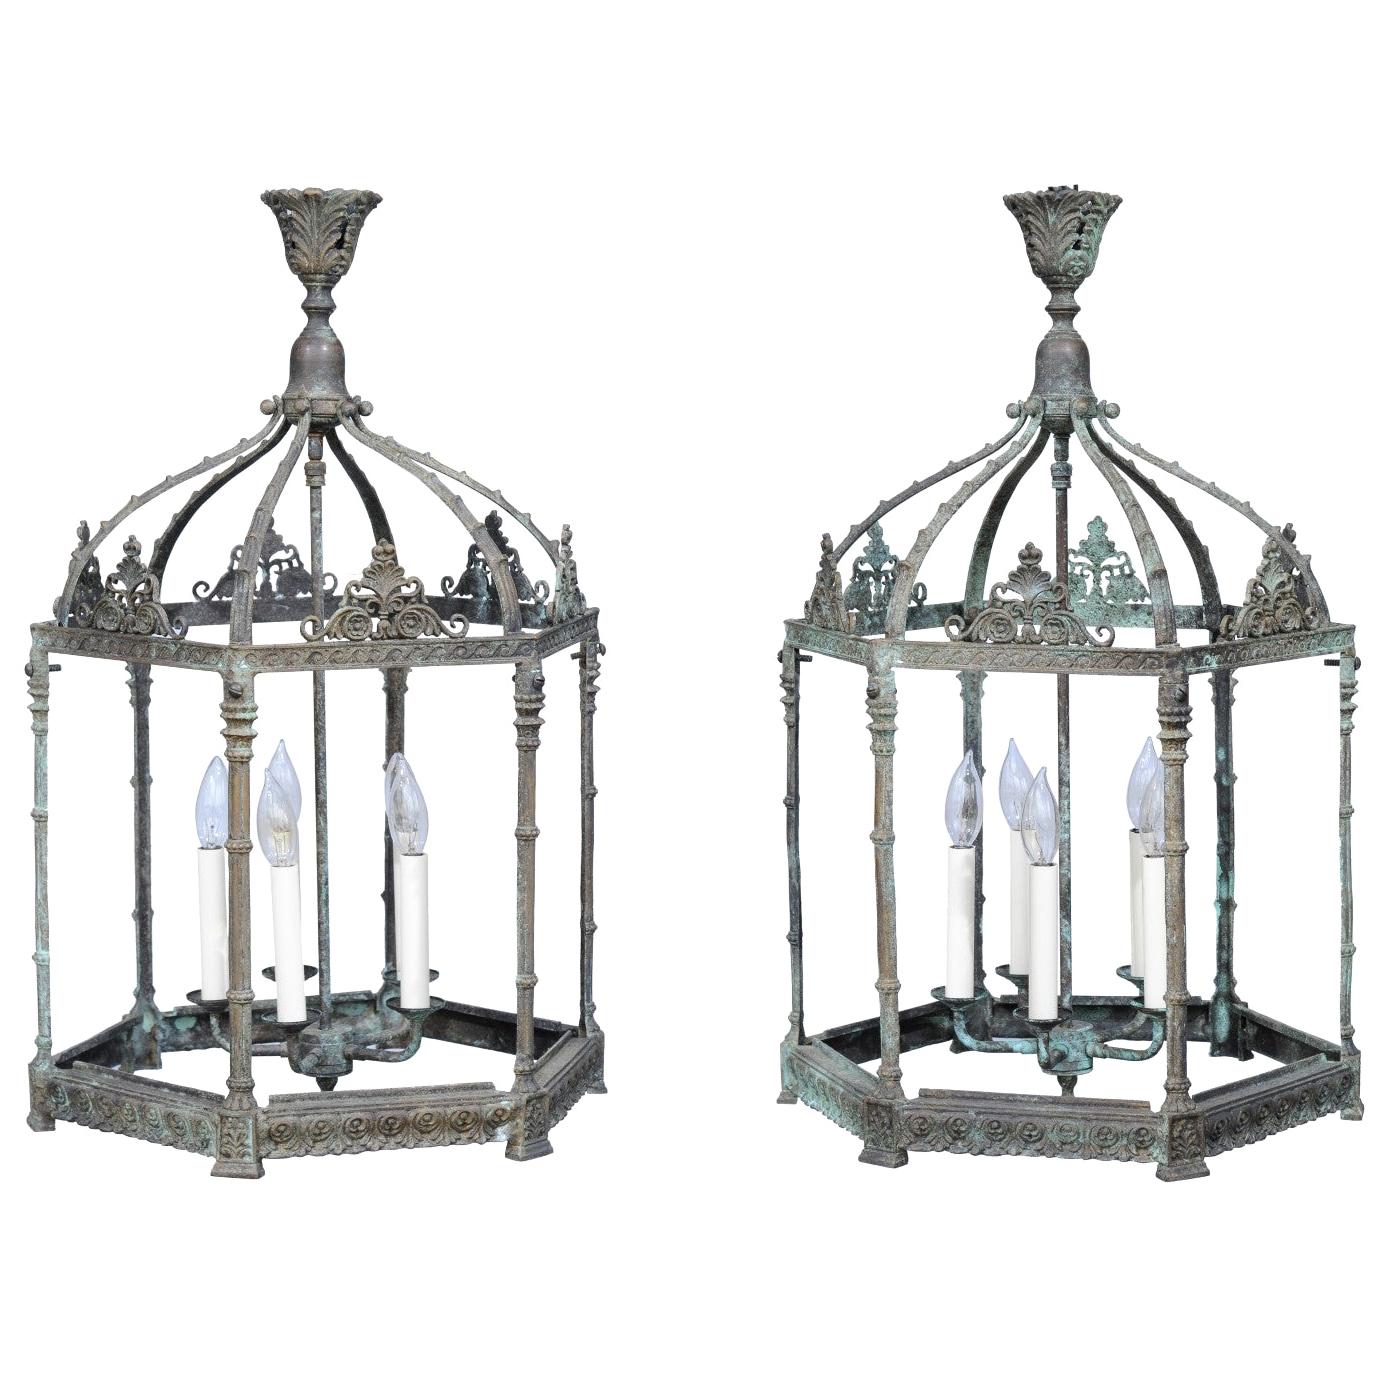 Pair of English Edwardian 1900s Five-Light Bronze Lanterns with Verdigris Patina